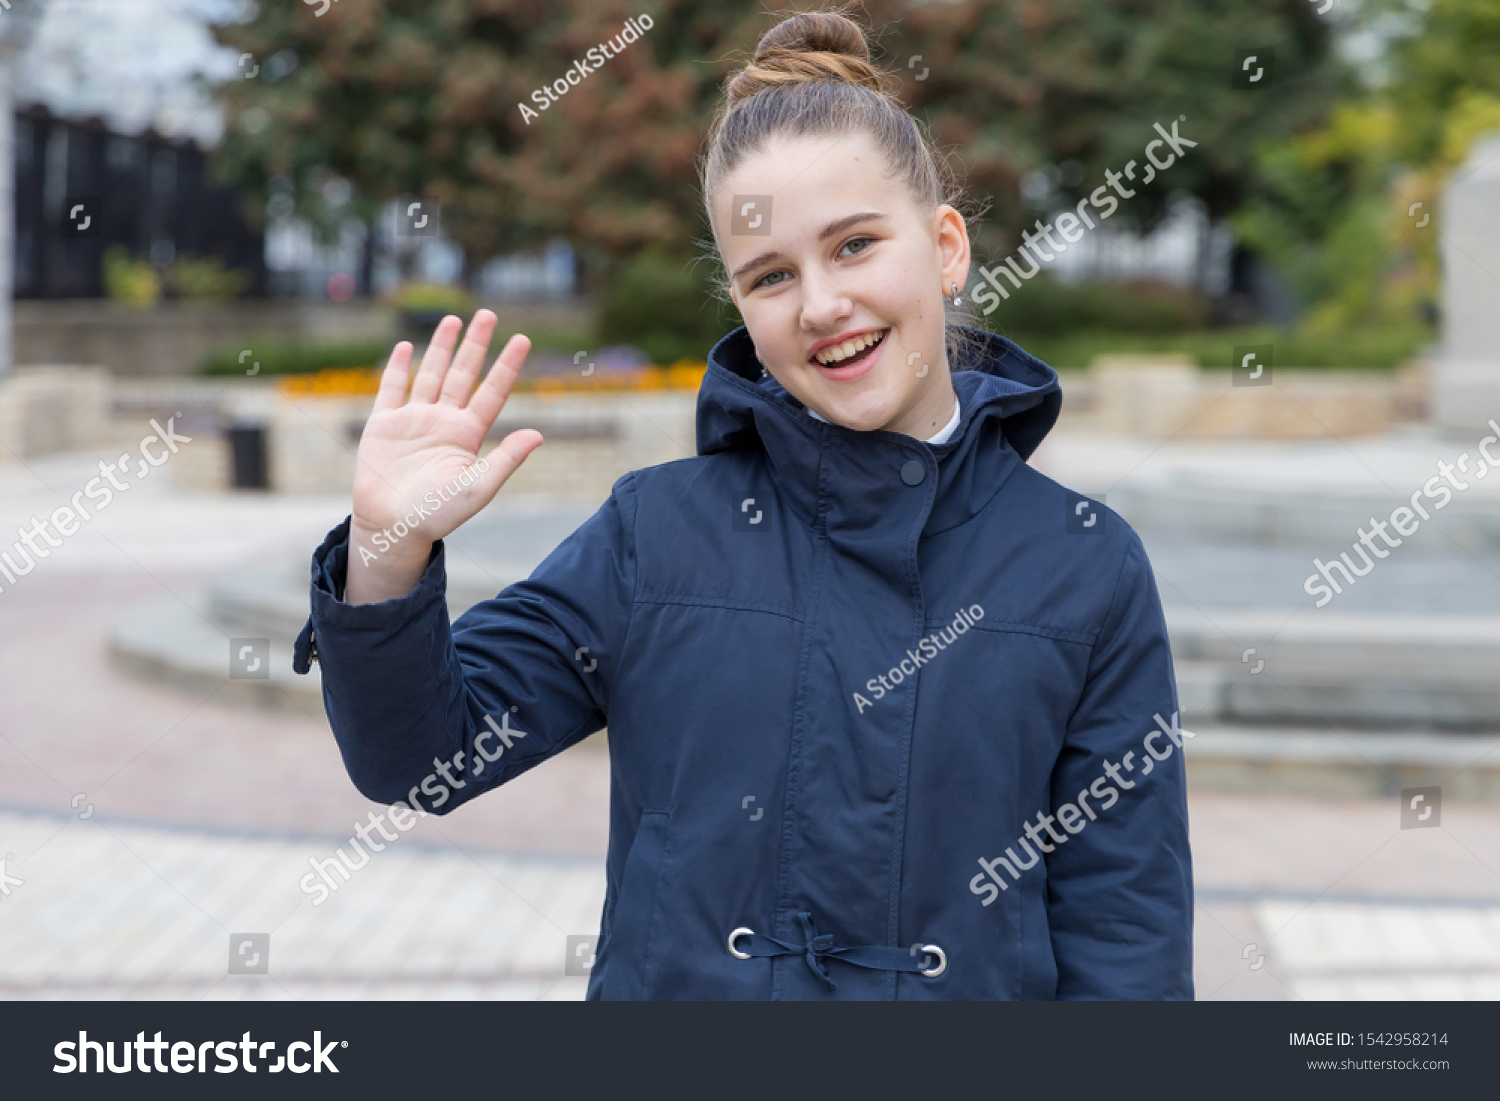 Teenager girl waves her hand, says hello or says goodbye. #1542958214